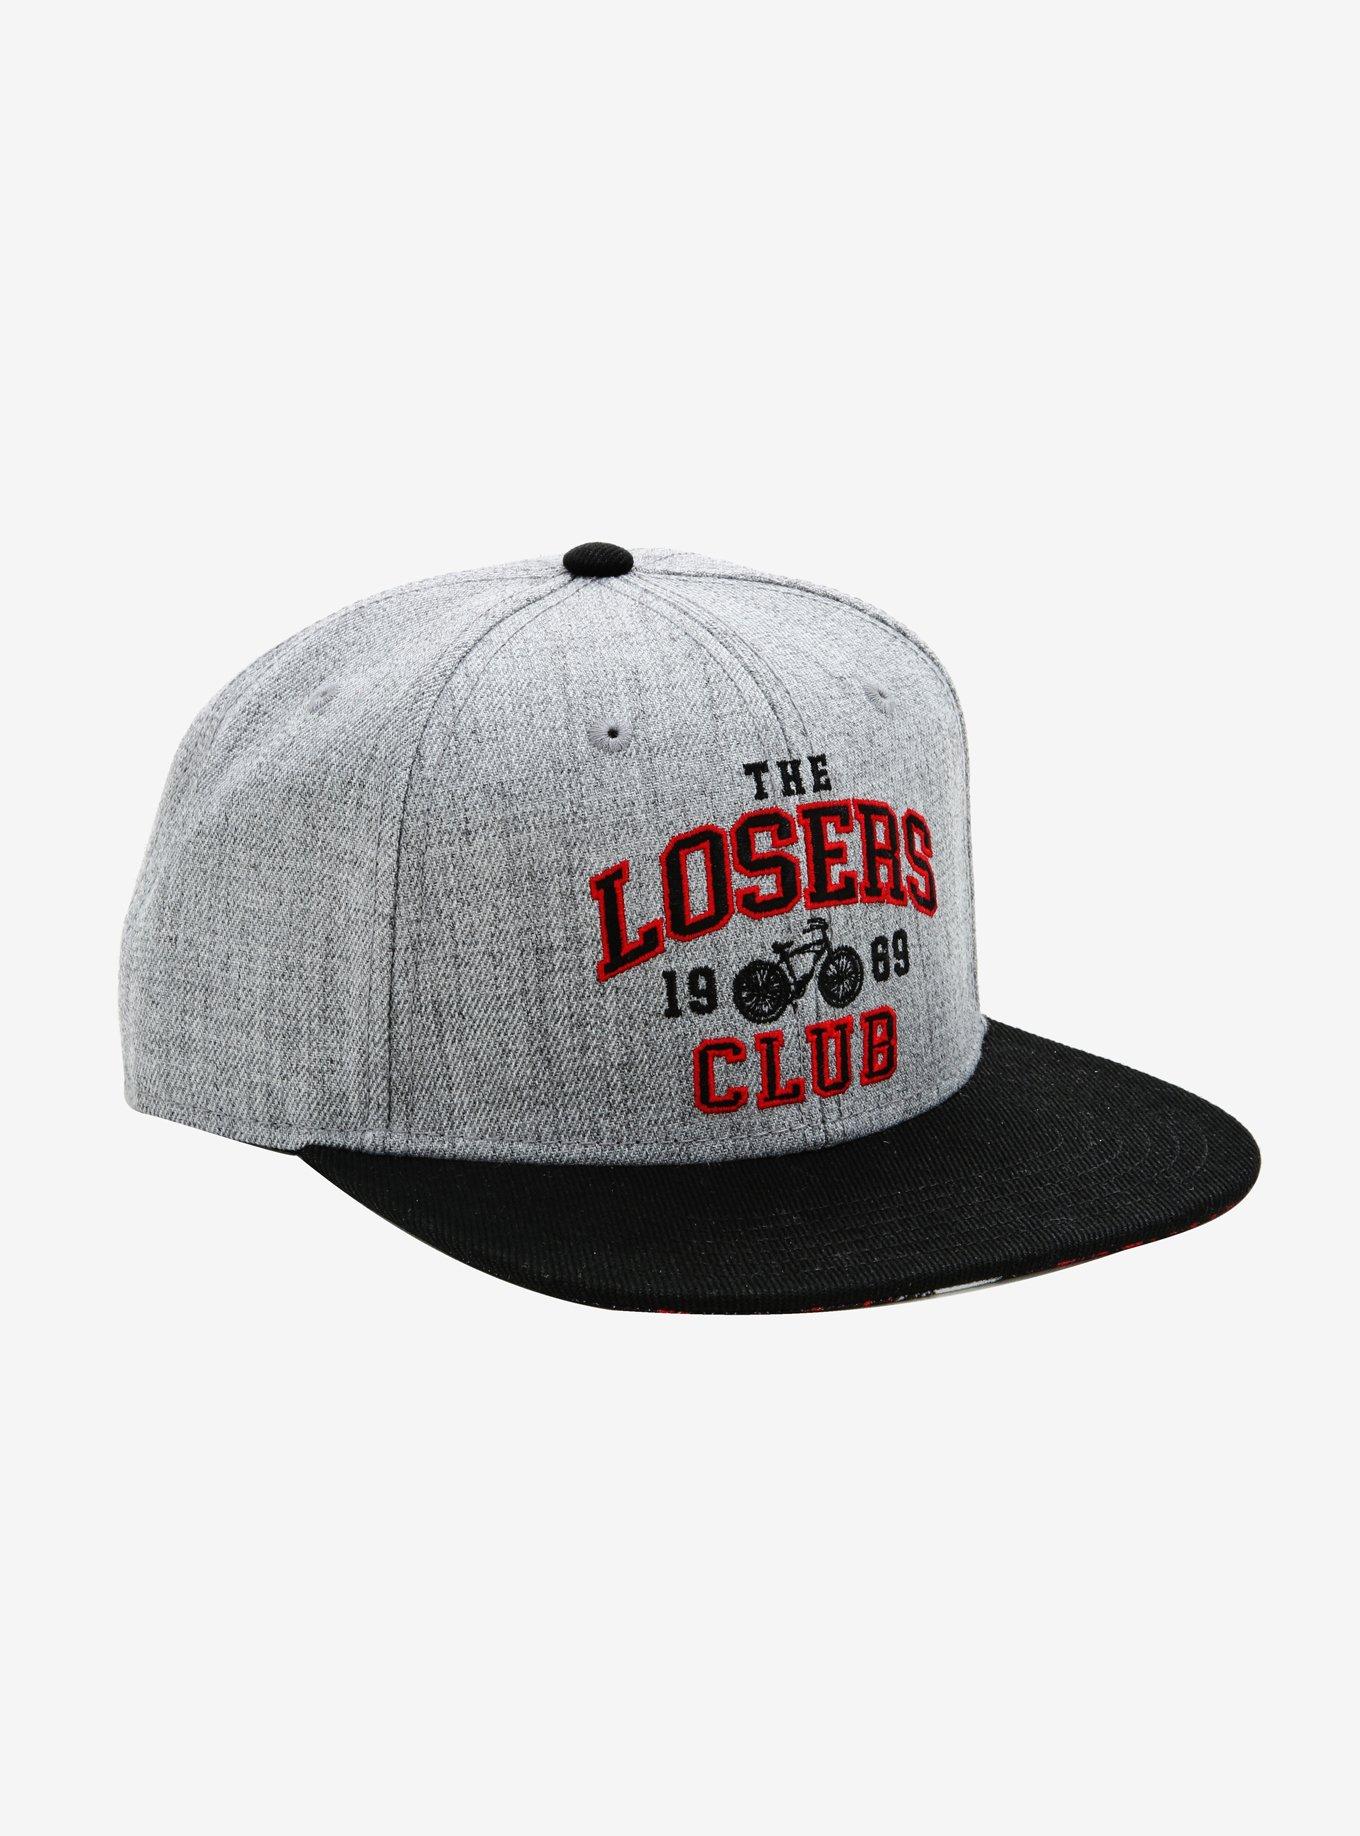 IT Losers Club Snapback Hat, , hi-res